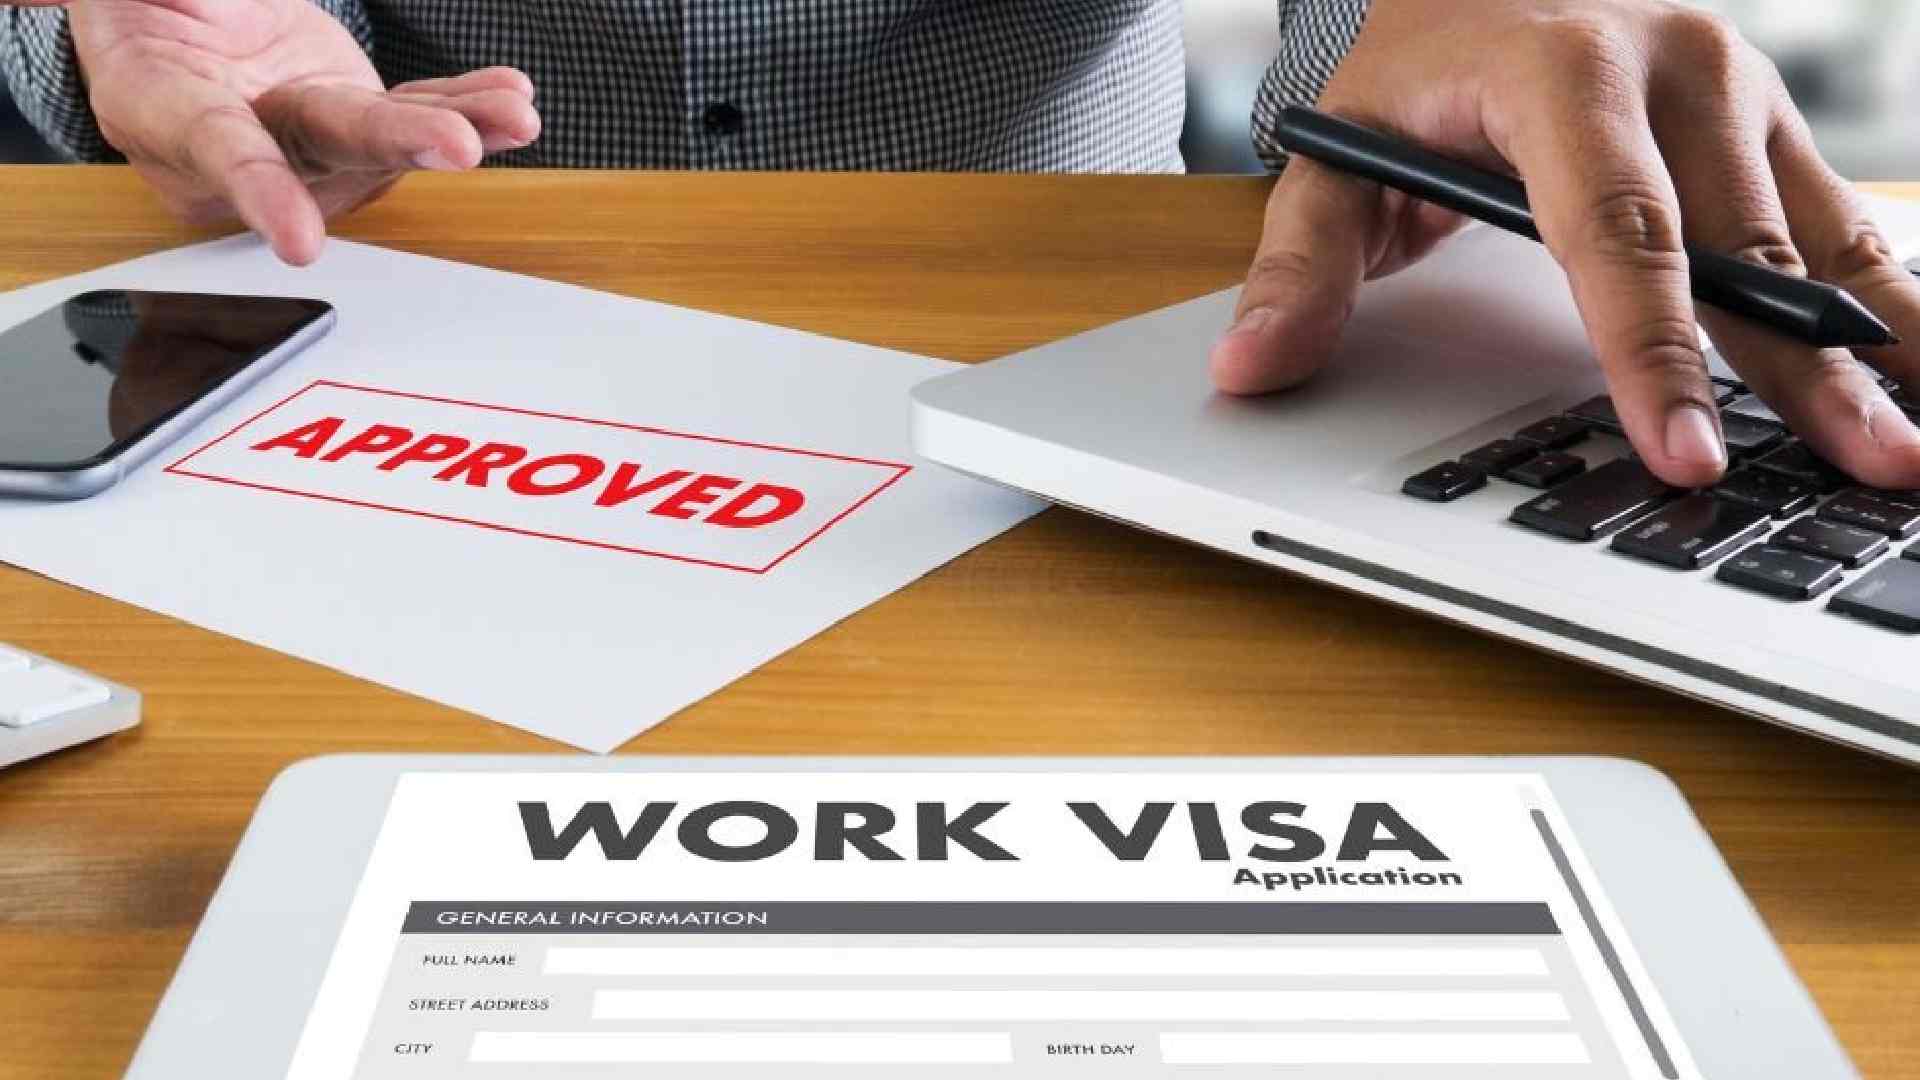 employment visa cost in uae 